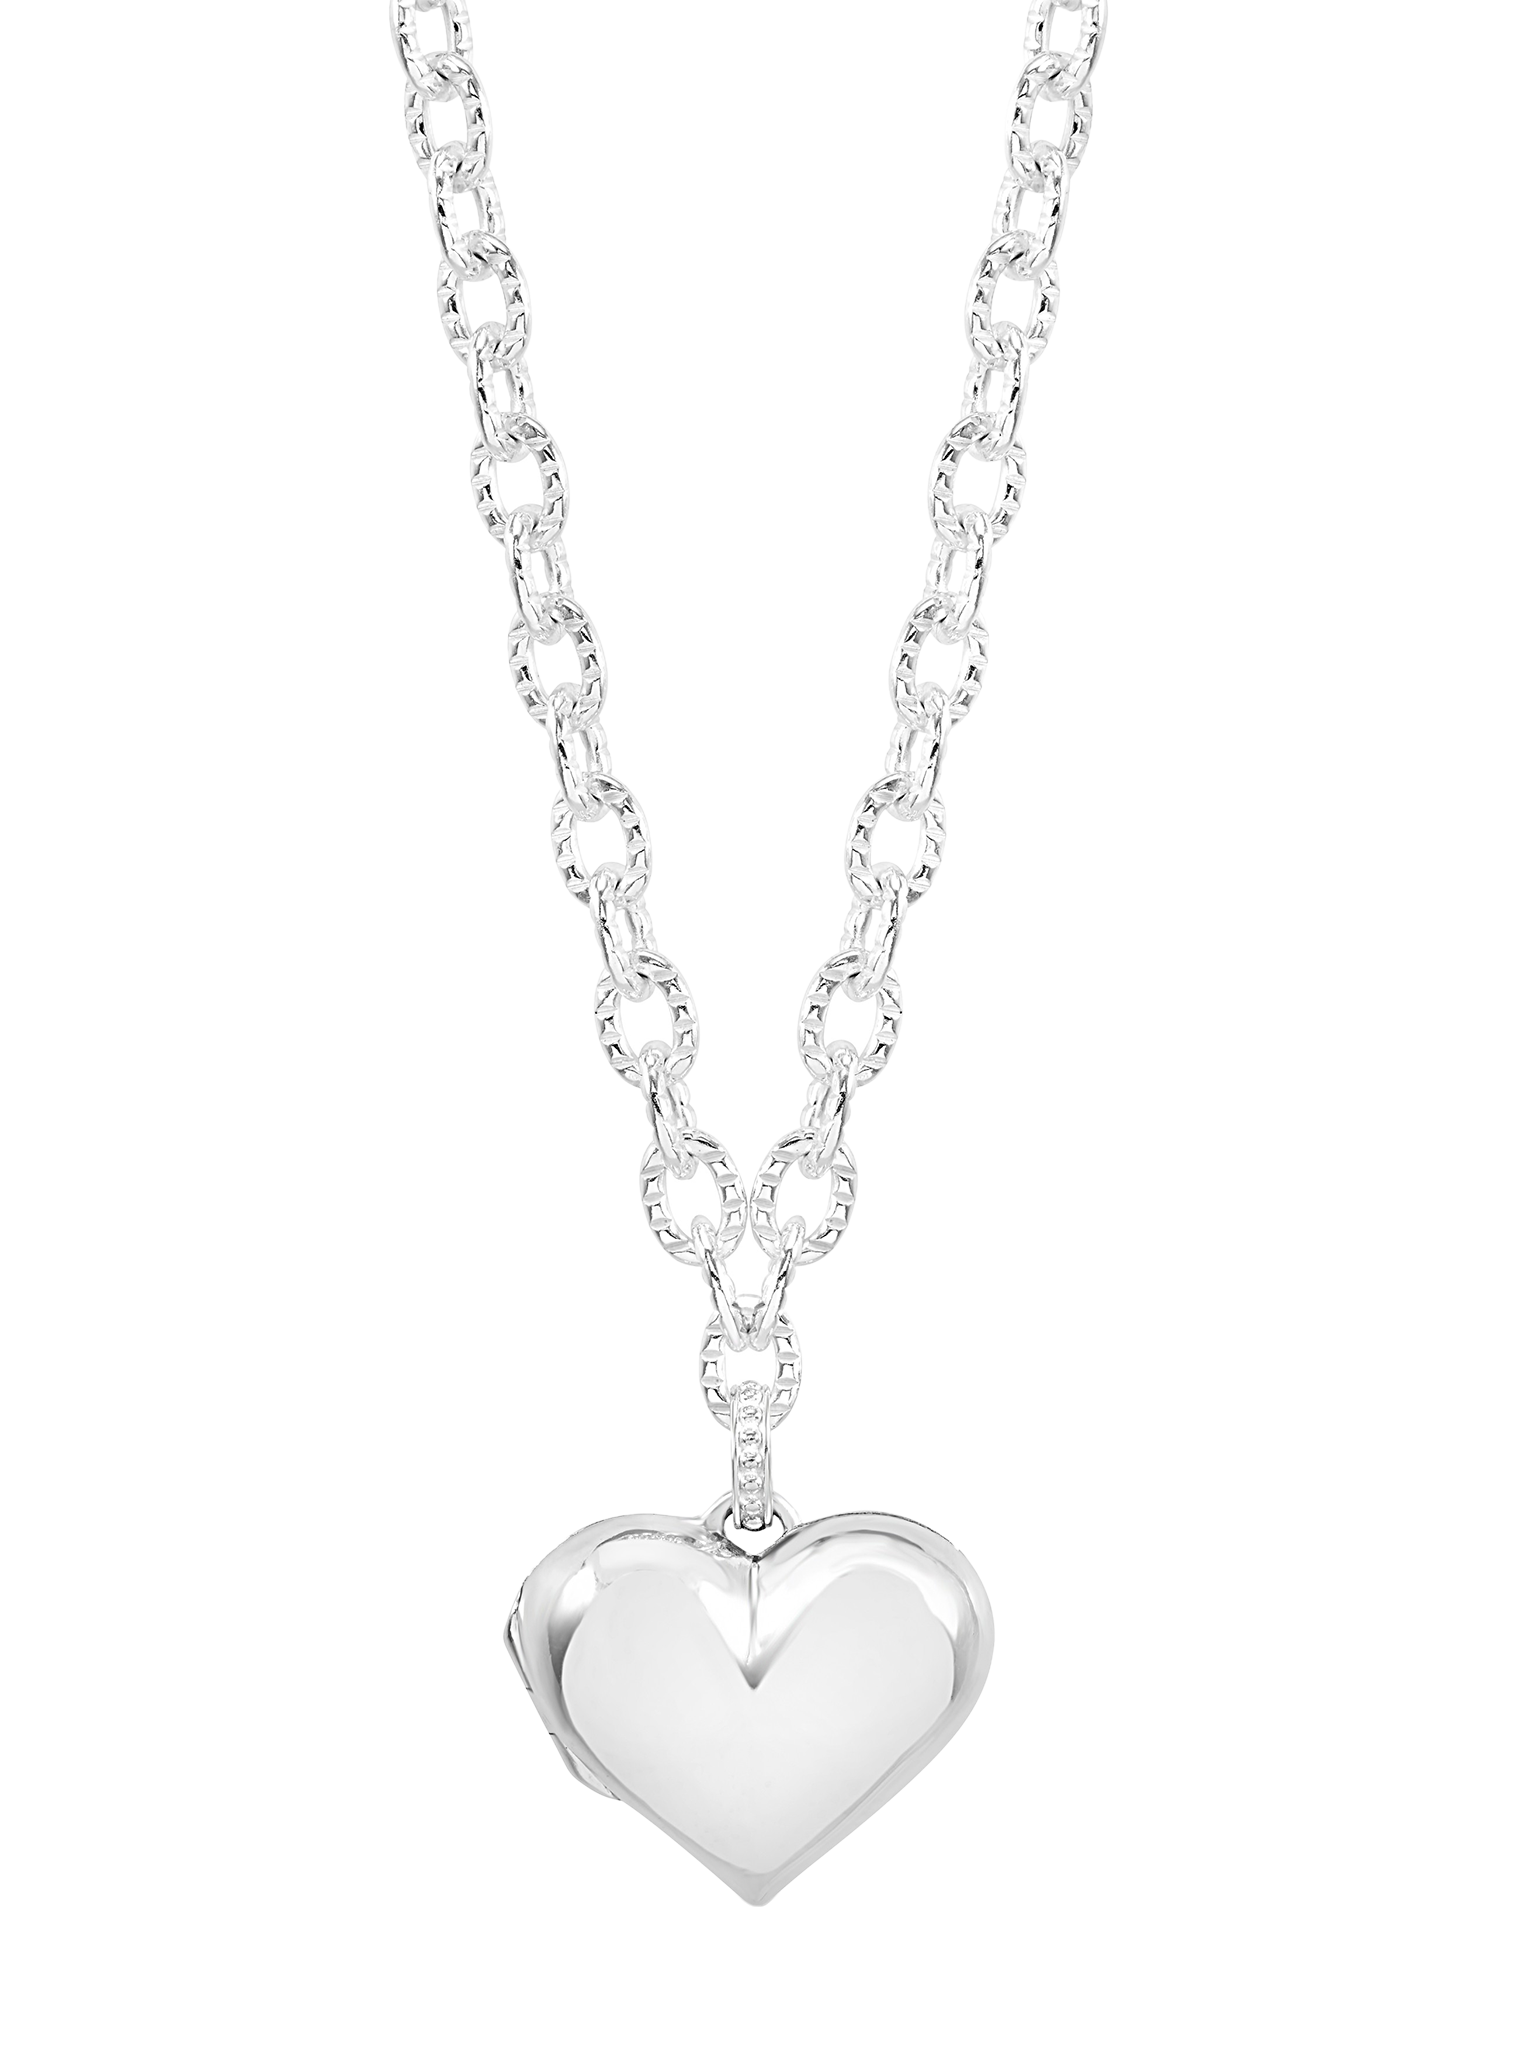 Treasured heart locket necklace